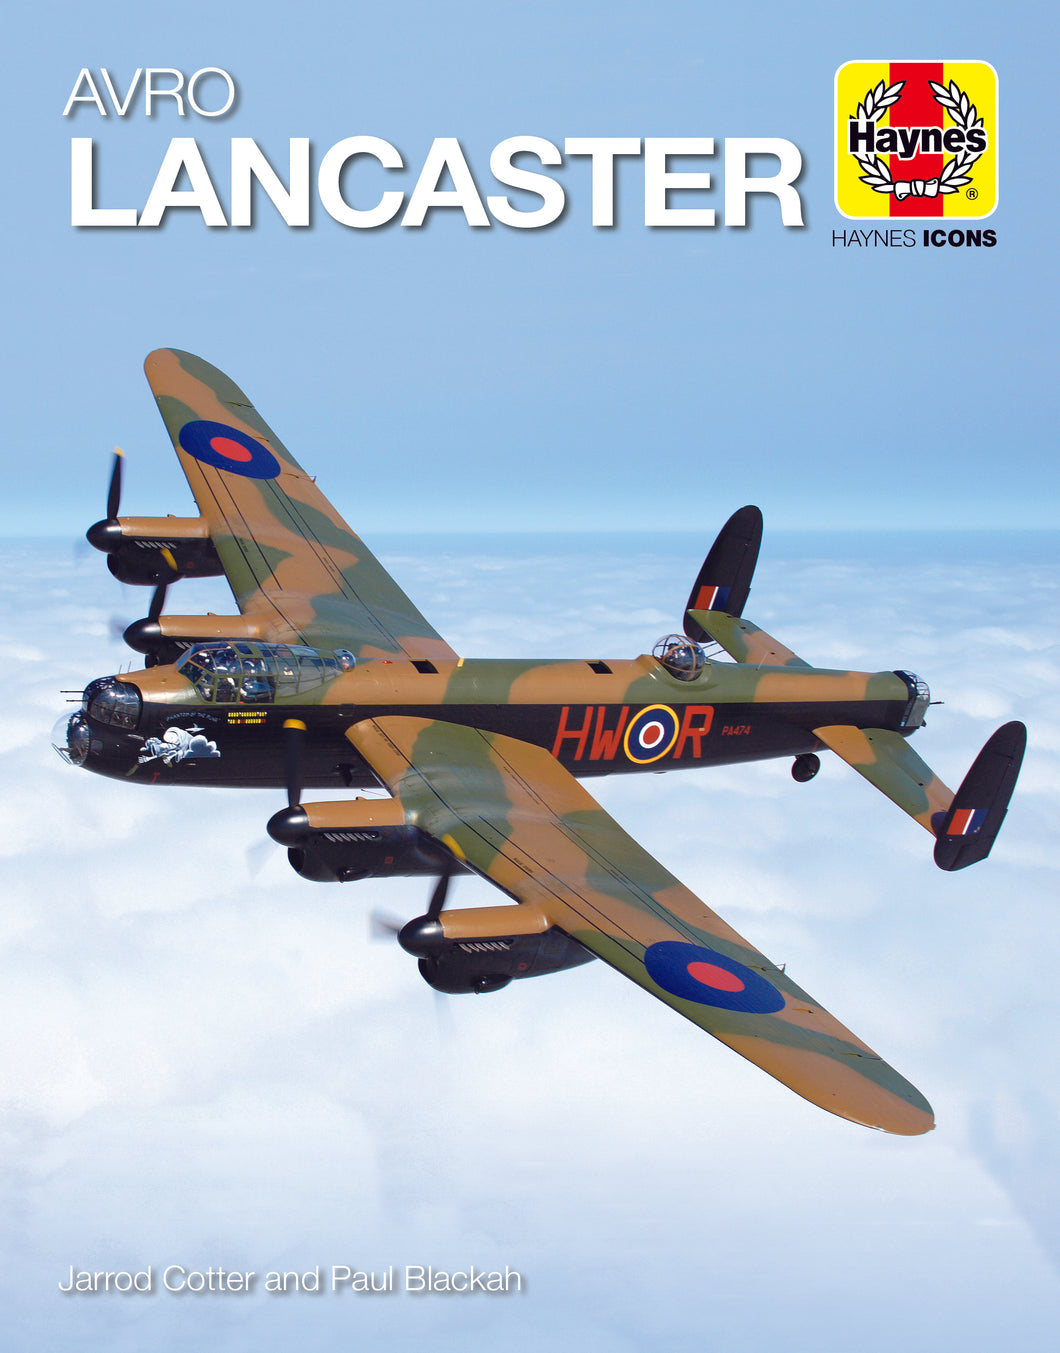 Haynes Icons AVRO Lancaster